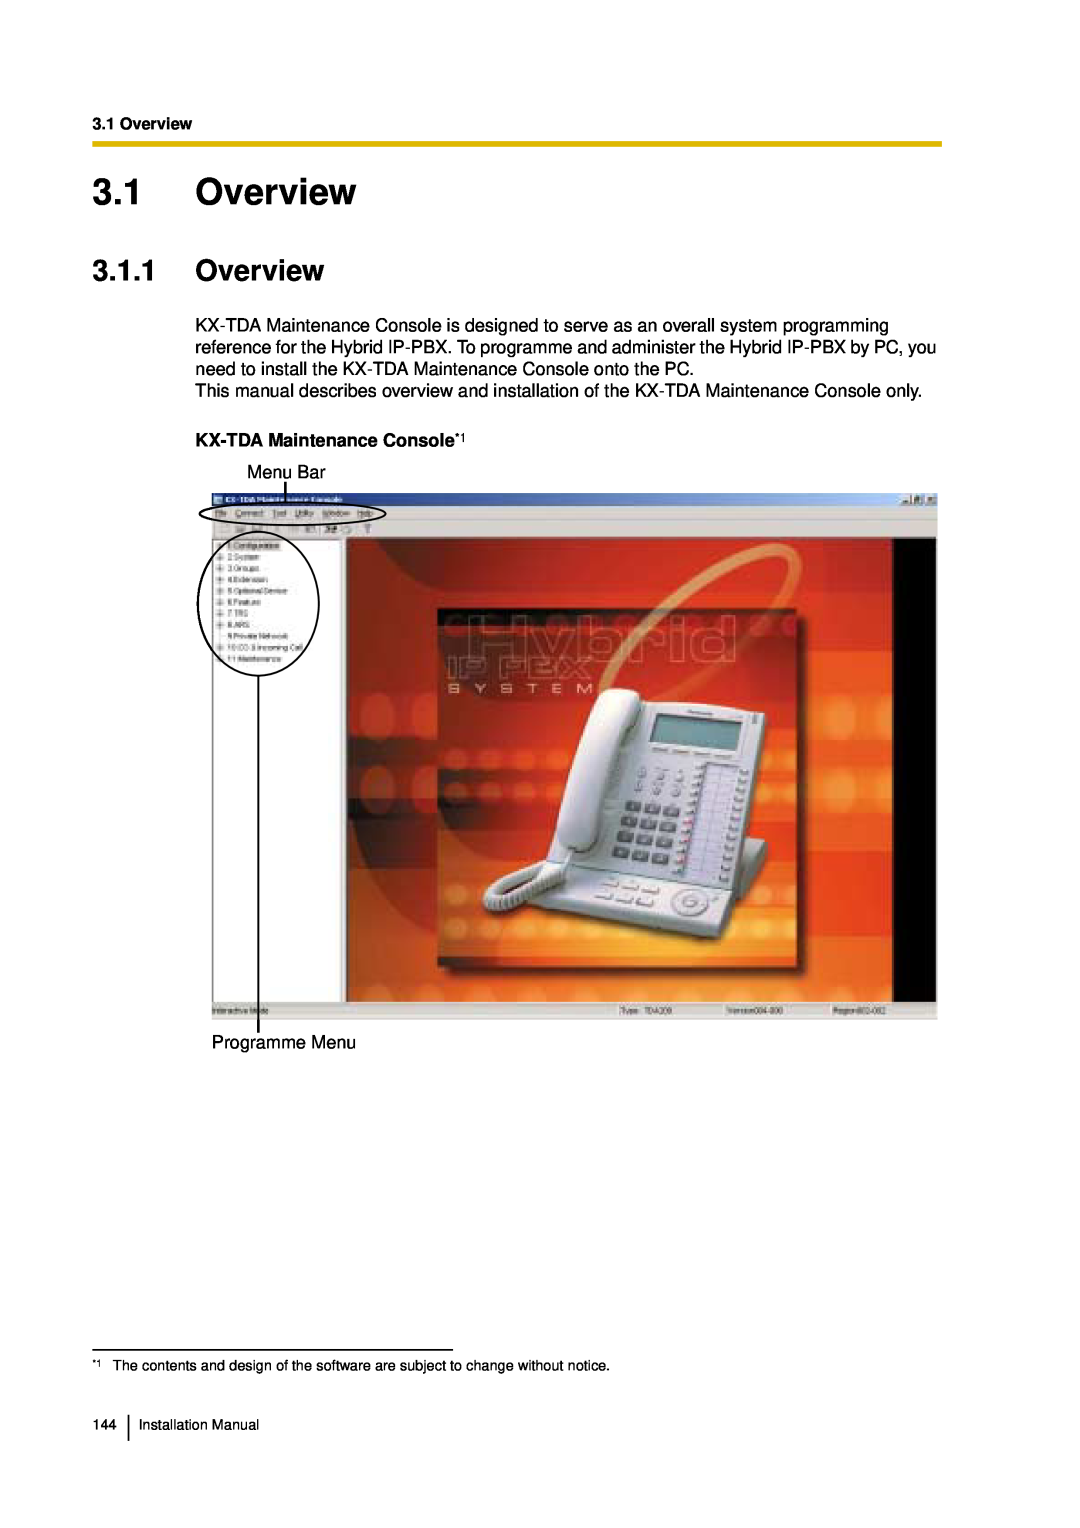 Panasonic KX-TDA30 installation manual 3.1Overview, 3.1.1Overview, KX-TDAMaintenance Console*1 